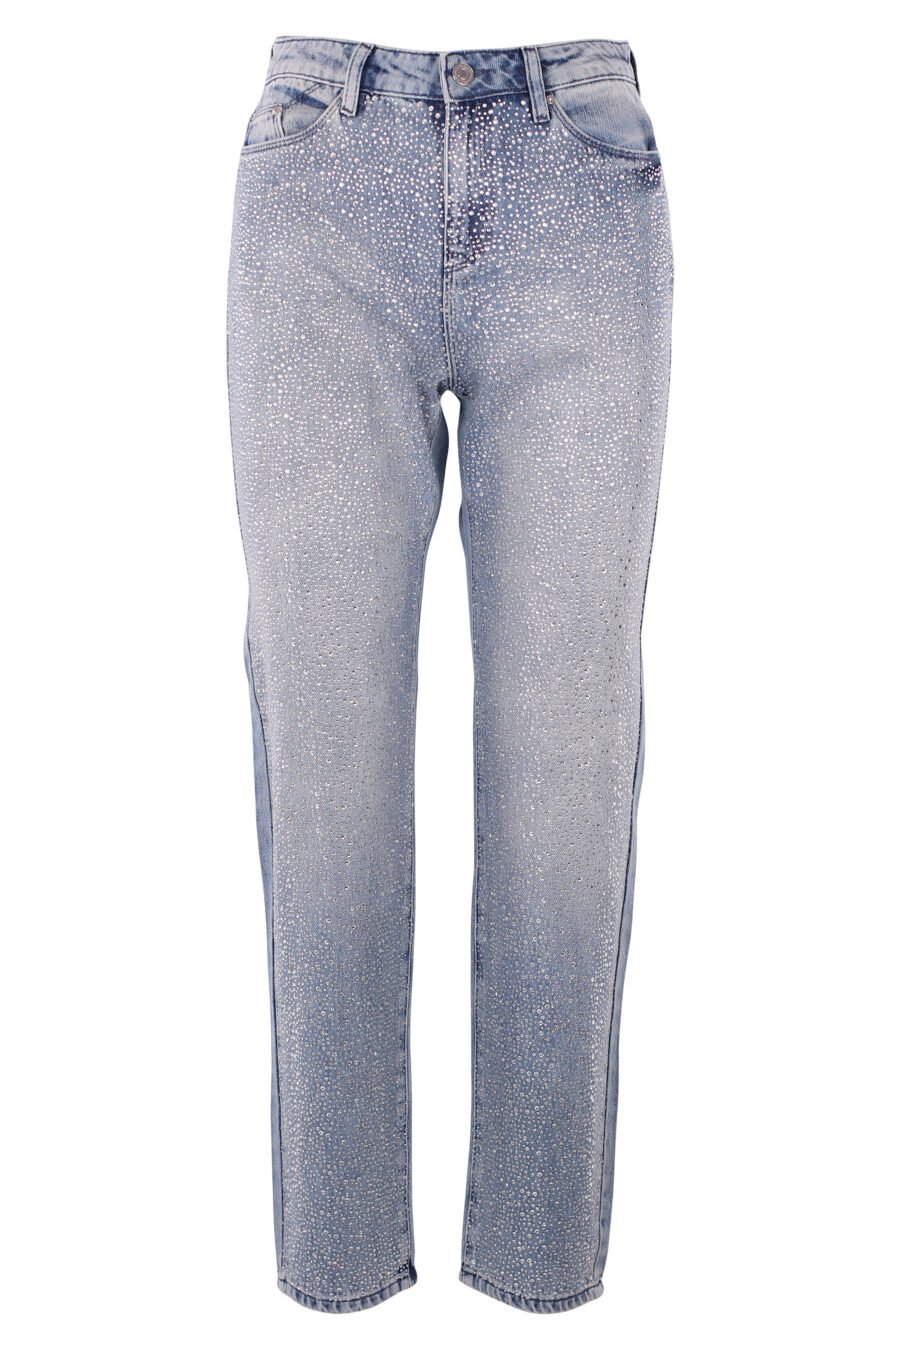 Blue jeans with rhinestone splash - IMG 6323